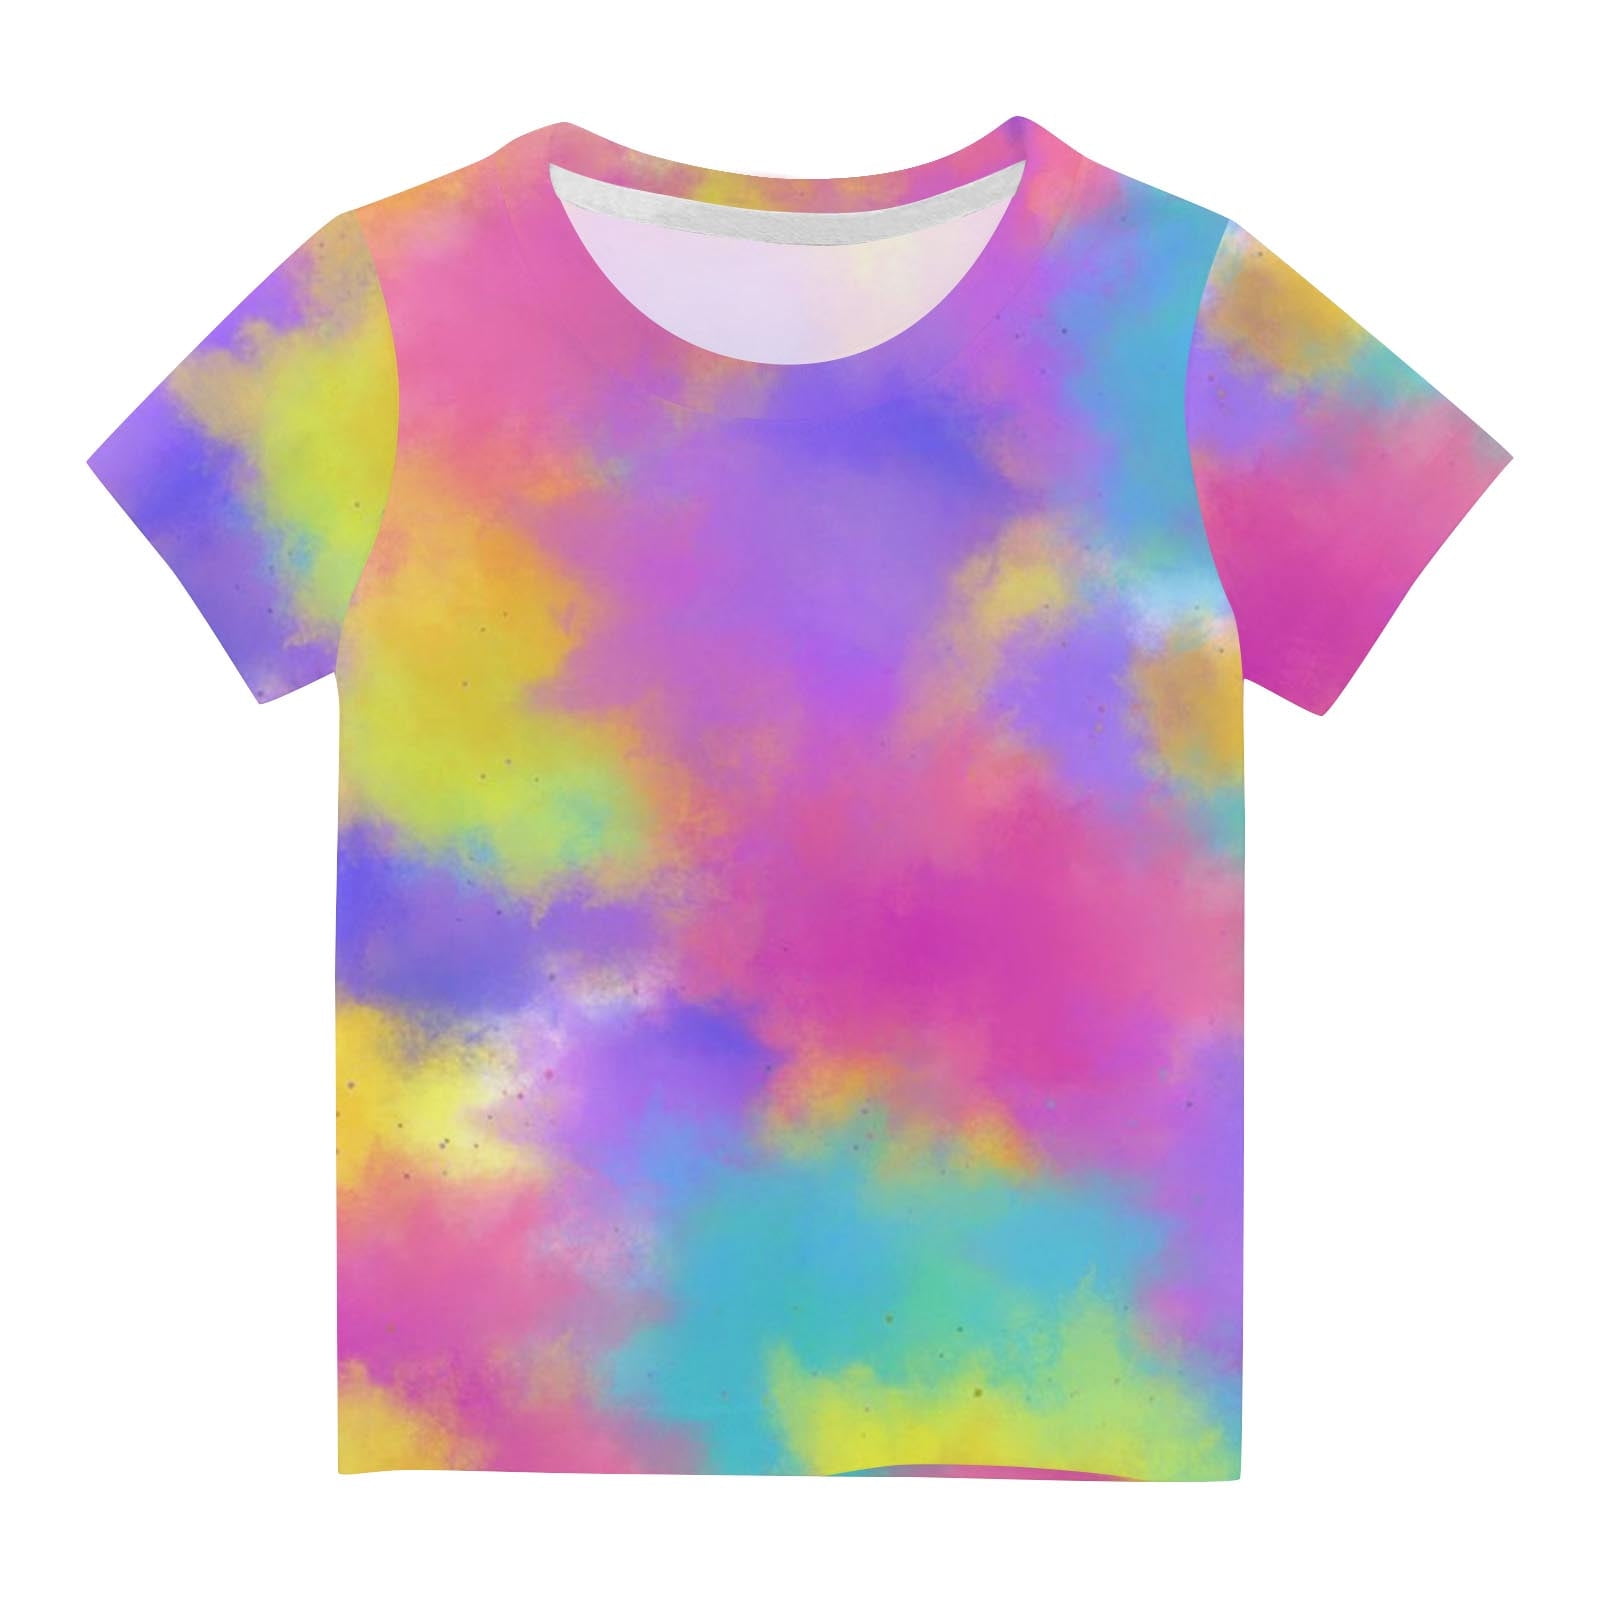 Penkiiy Tie Dye Shirts For Kids Short Sleeve Graphic T-Shirt Round Neck ...